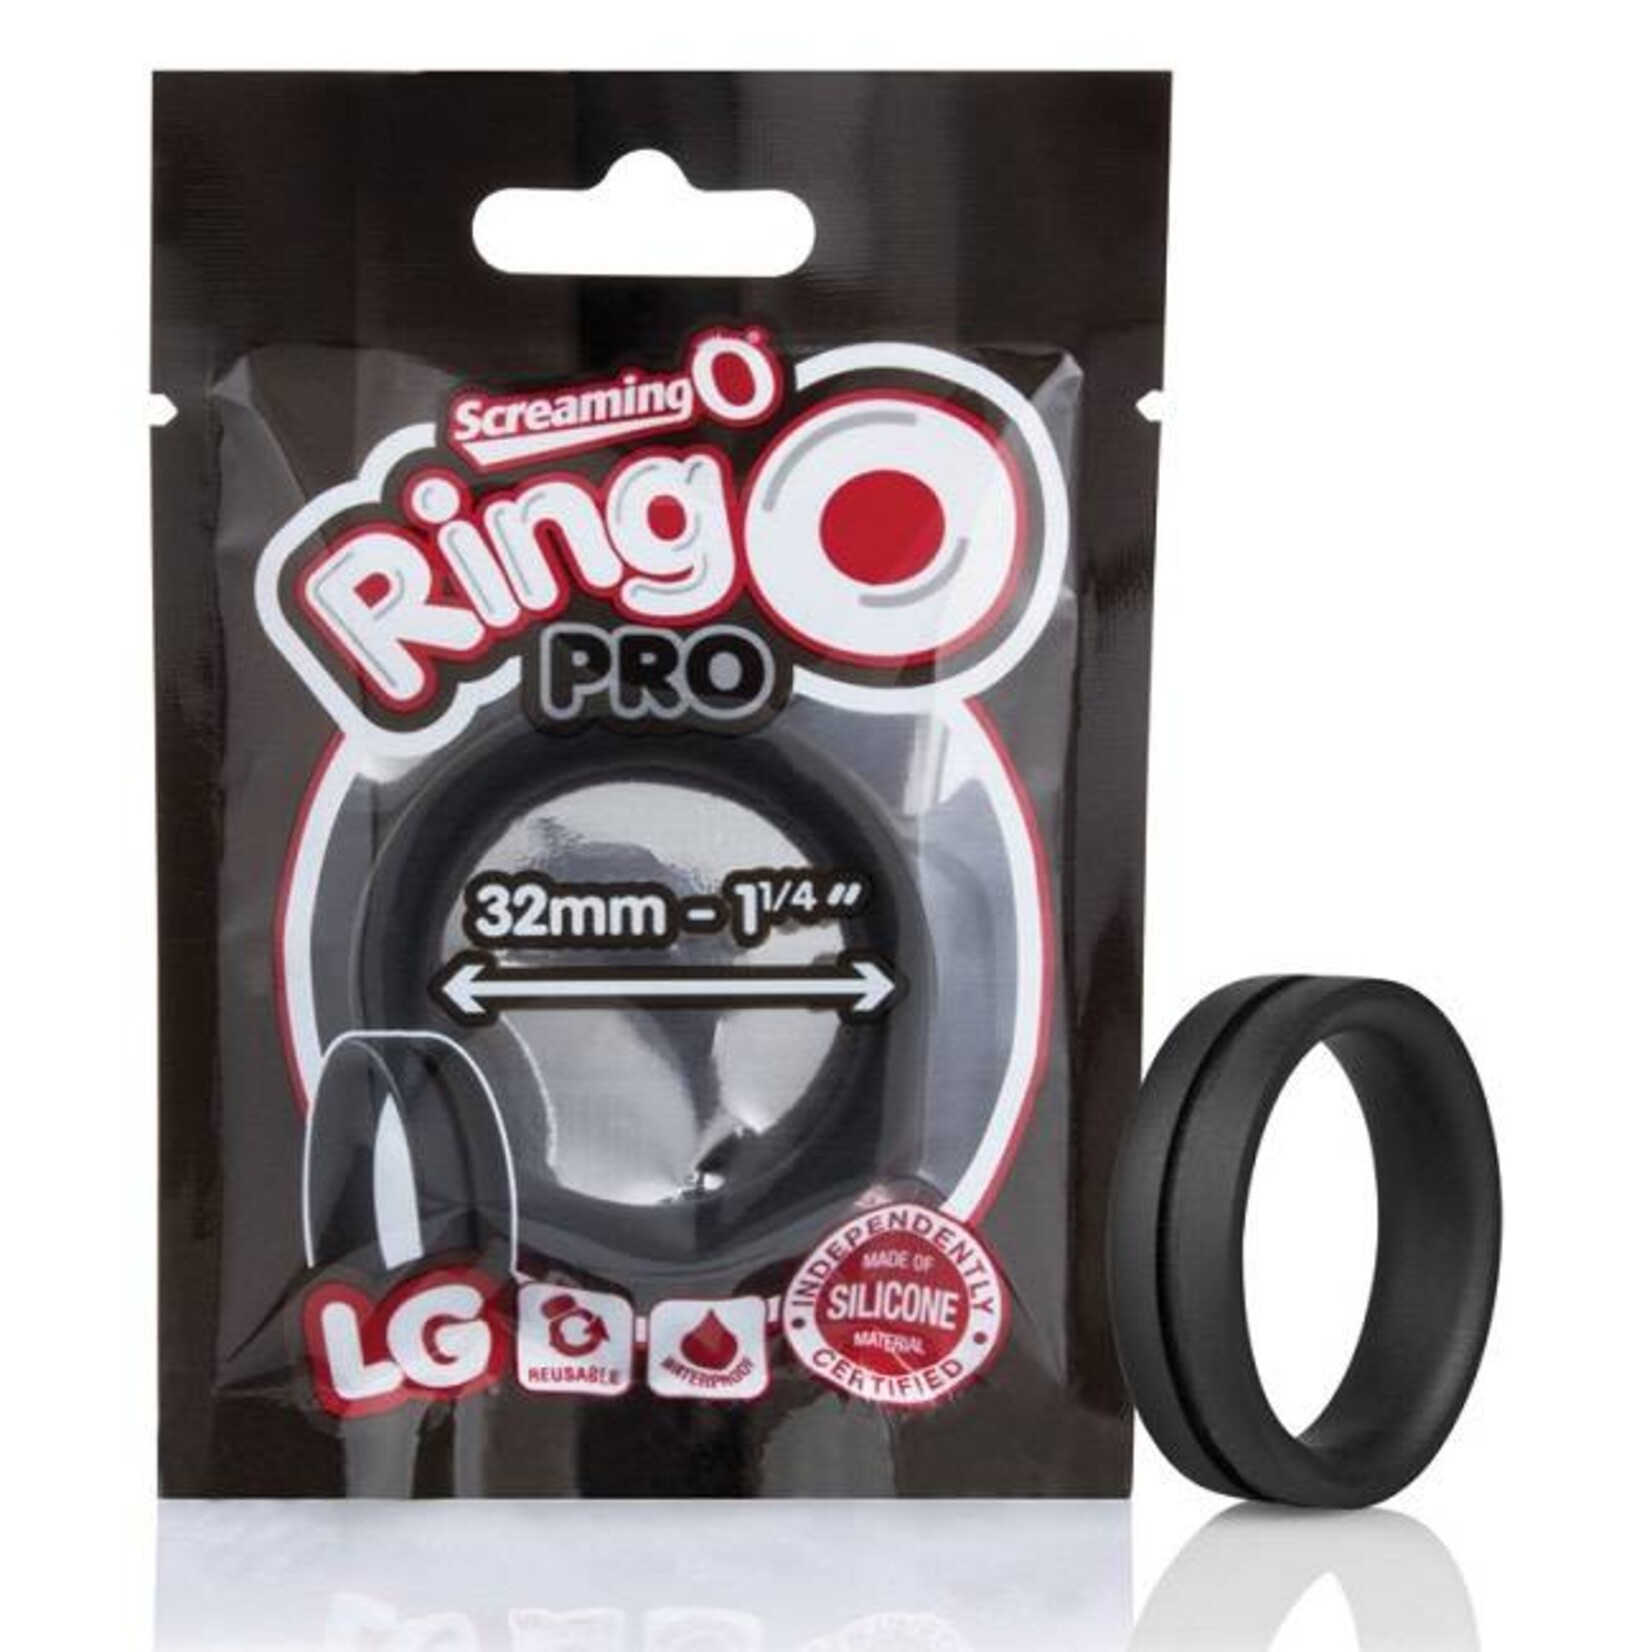 Screaming O Screaming O - RingO Pro LG